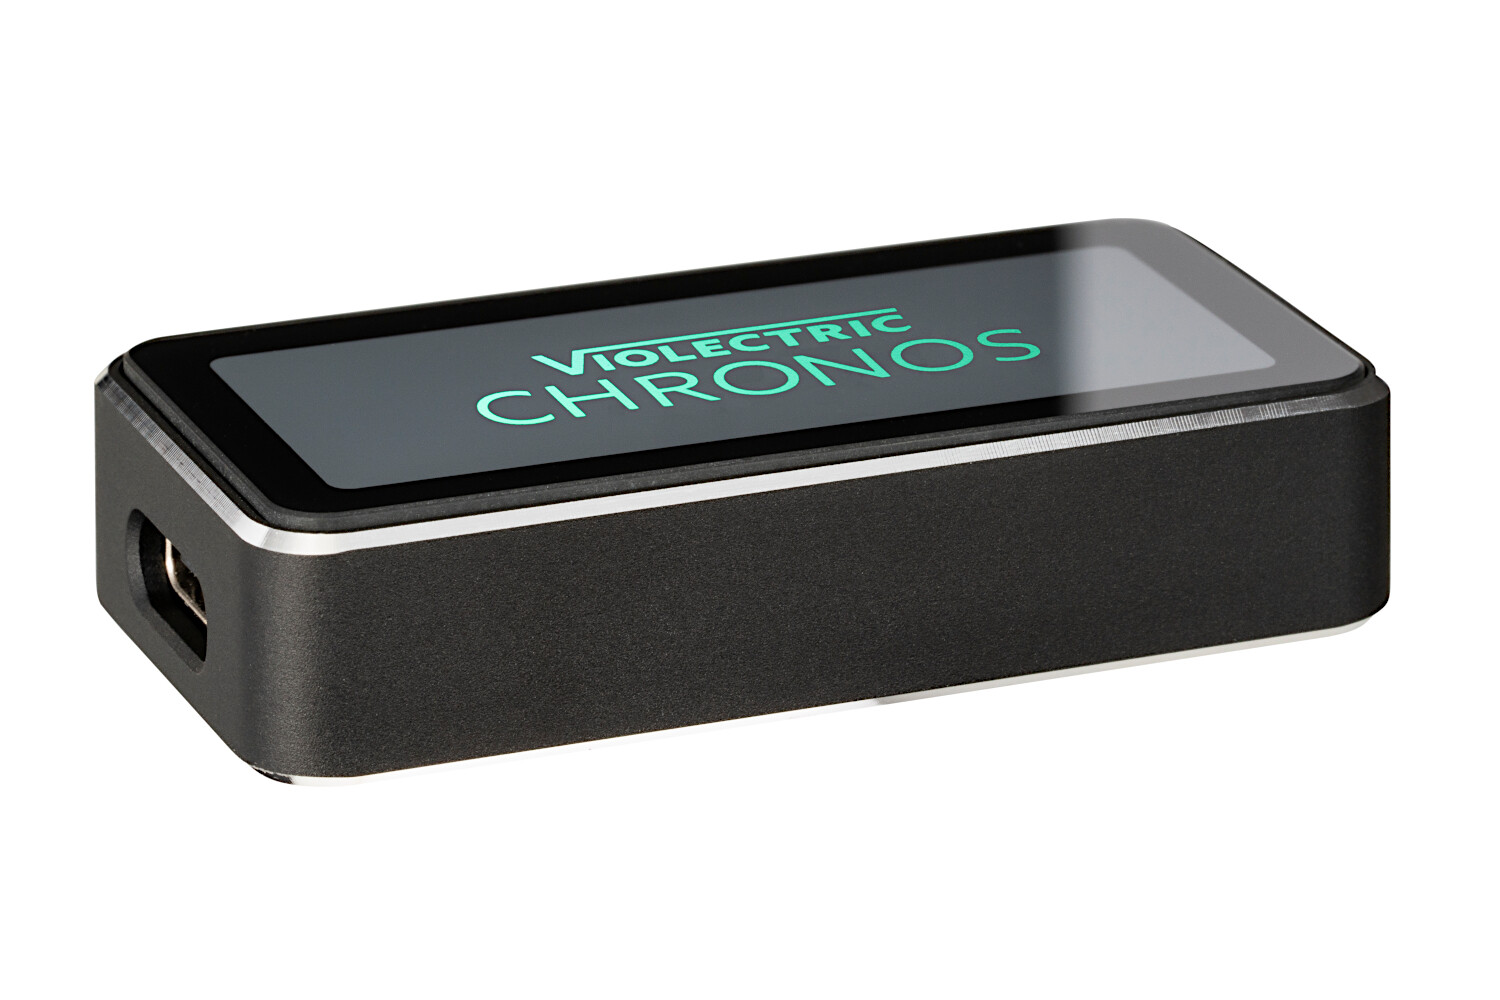 Violectric Chronos portable DAC  & headphone amp